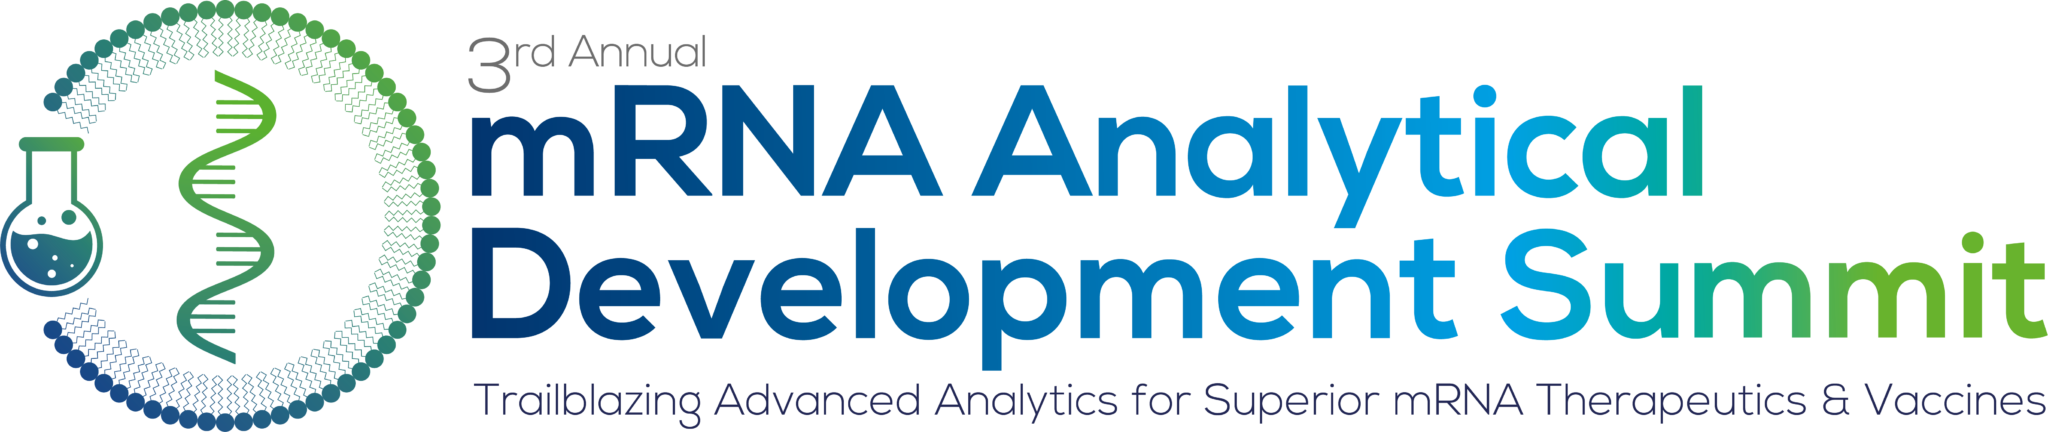 3rd-mRNA-Analytical-Development-Summit-logo-FINAL-With-Tag-1-2048x432 (1)